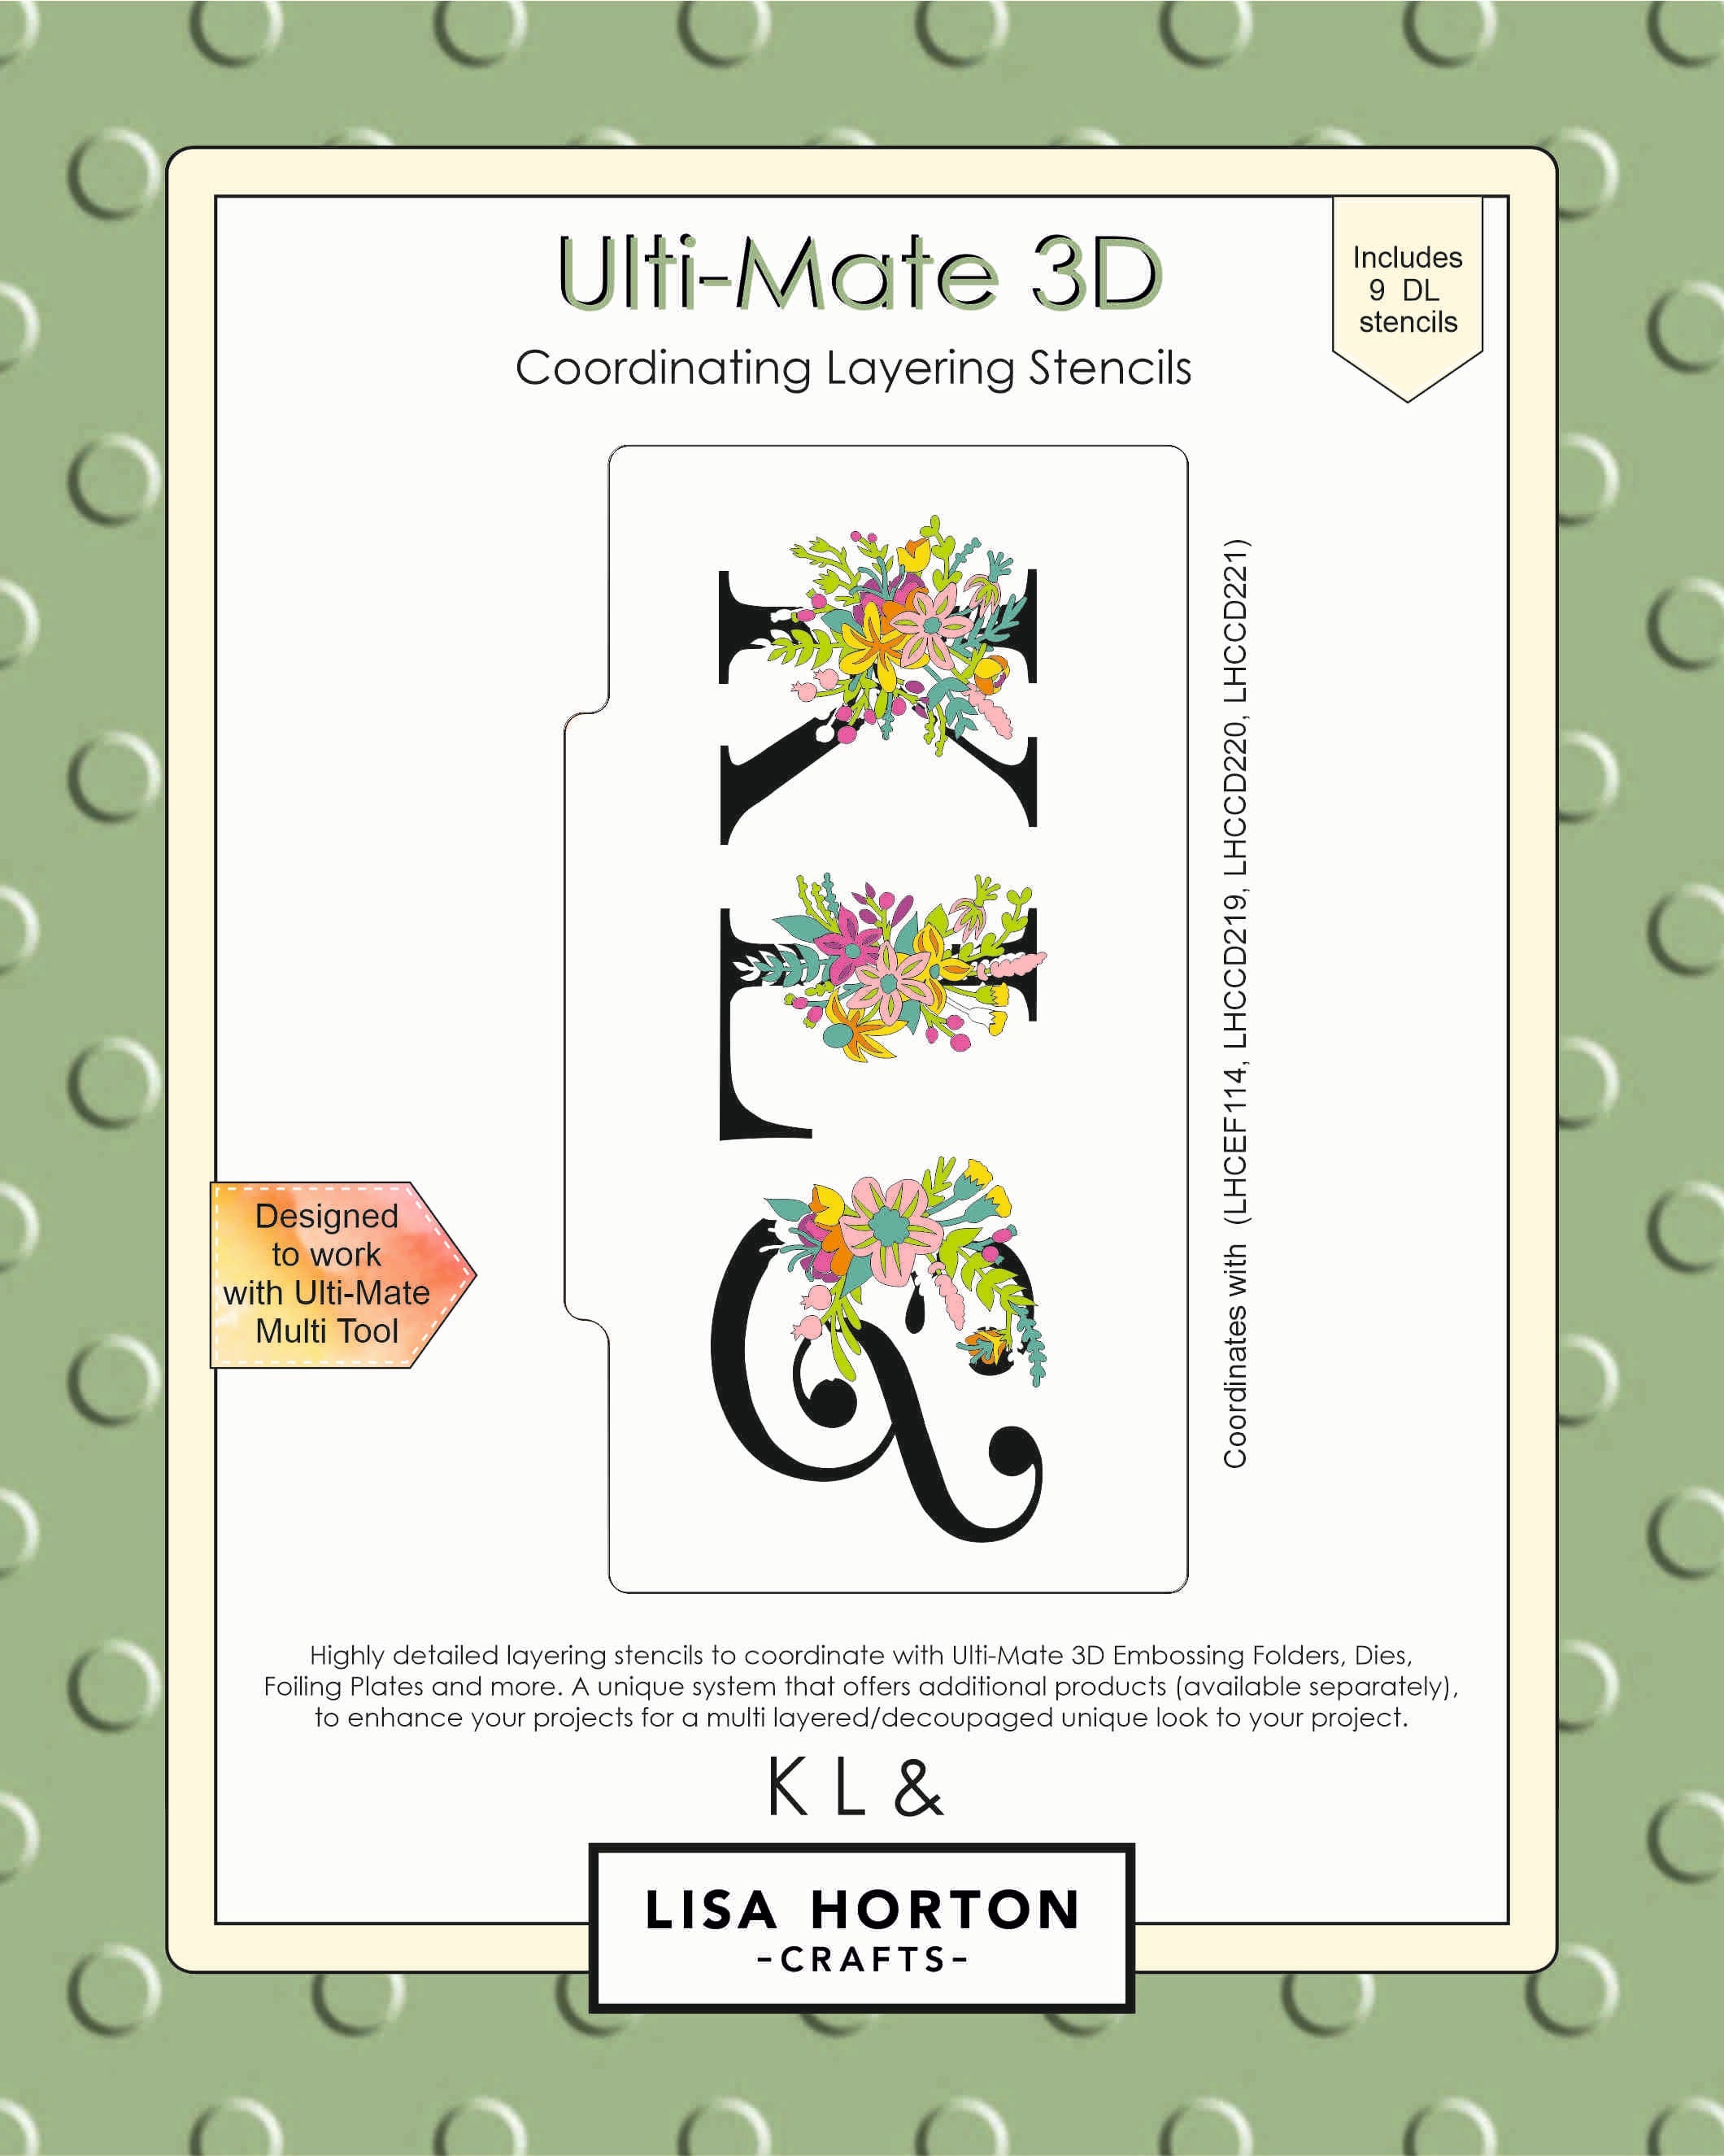 Lisa Horton Crafts Ulti-Mate 3D Slimline Layering Stencils KL&